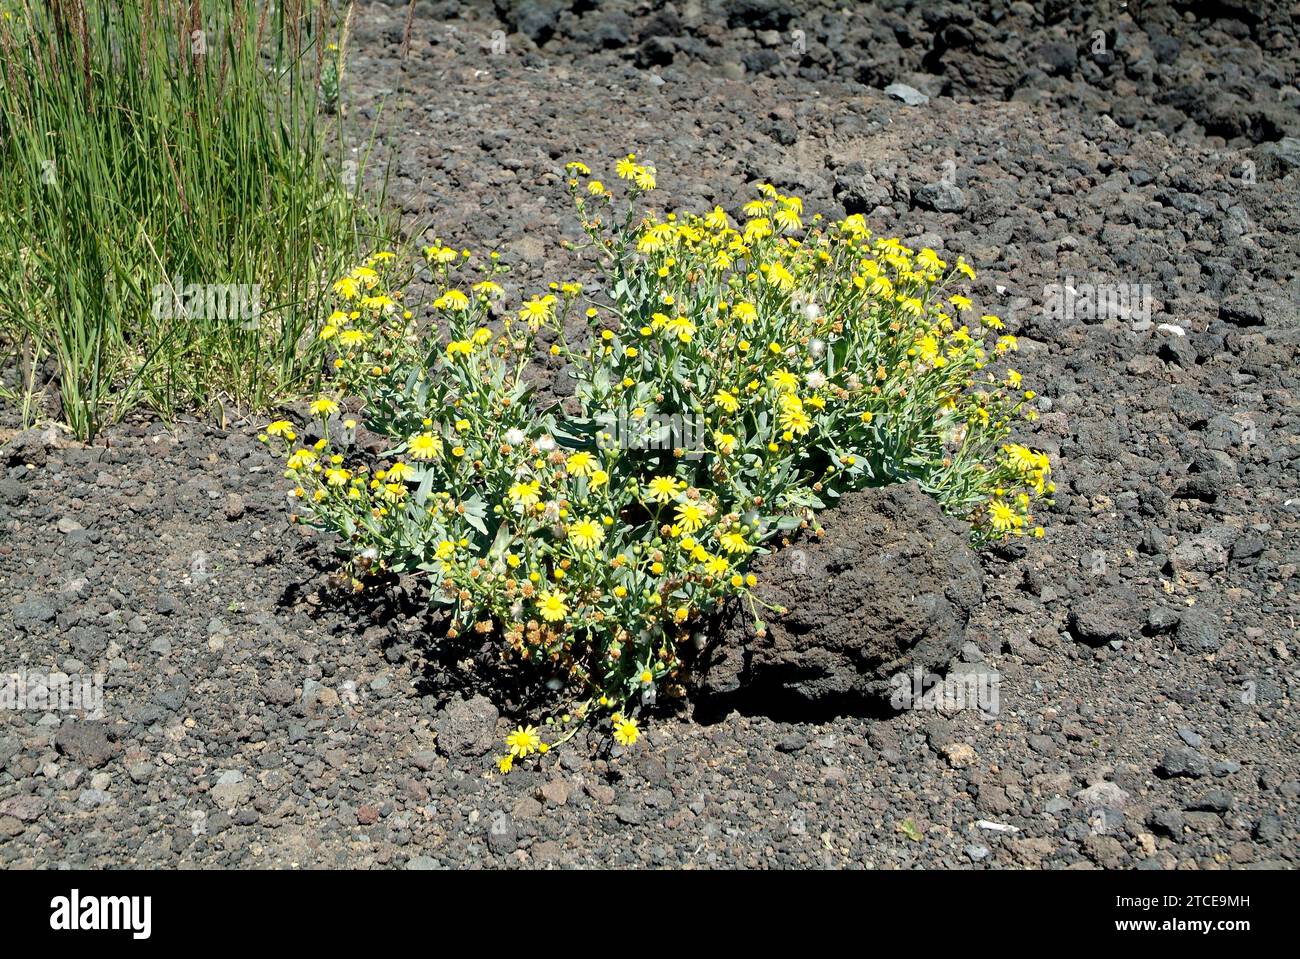 Senecio aetnensis or Senecio squalidus aetnensis is a perennial herb endemic to Etna (Sicily). Stock Photo